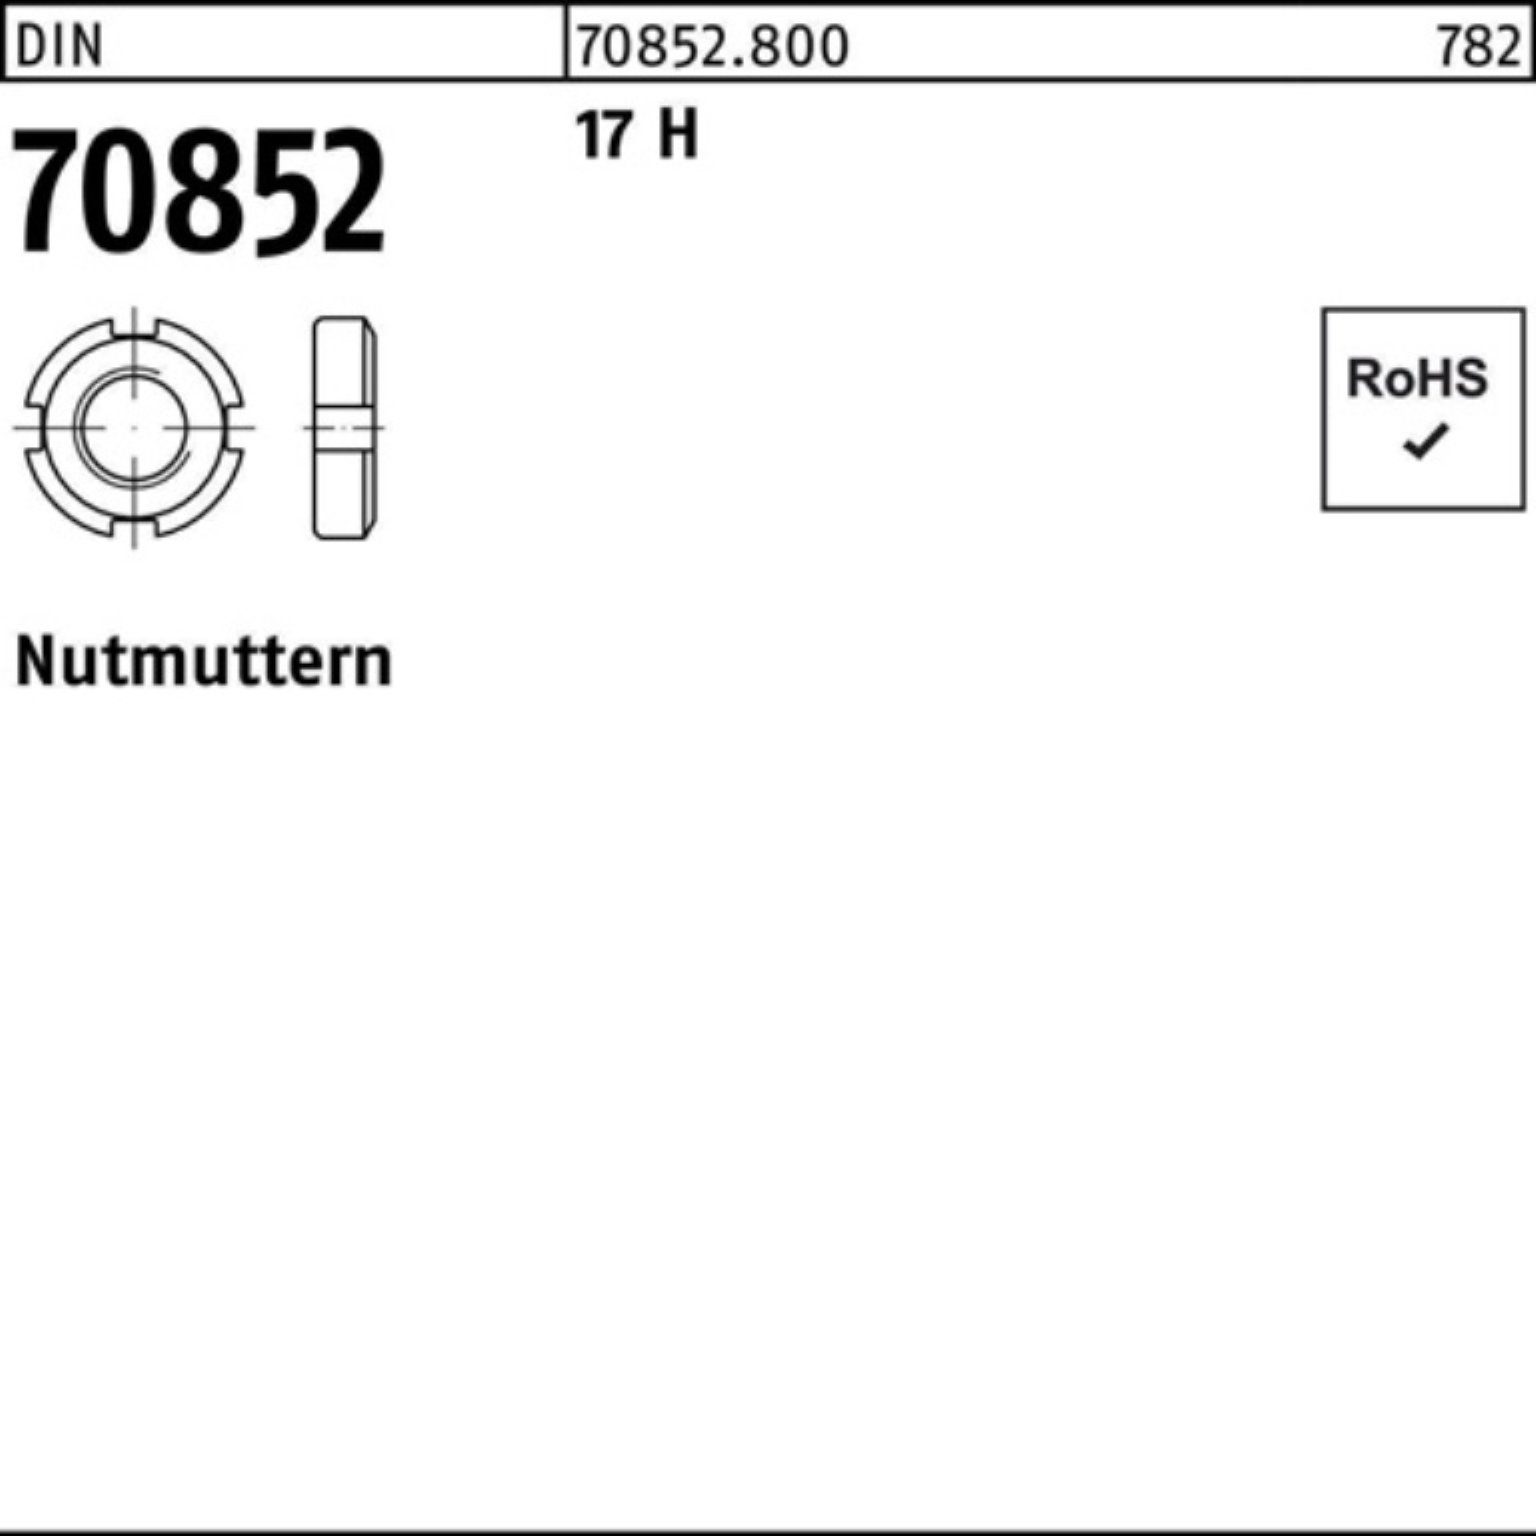 Reyher Nutmutter 100er Pack Nutmutter DIN 70852 M50x 1,5 17 H 1 Stück DIN 70852 17 H N | Muttern